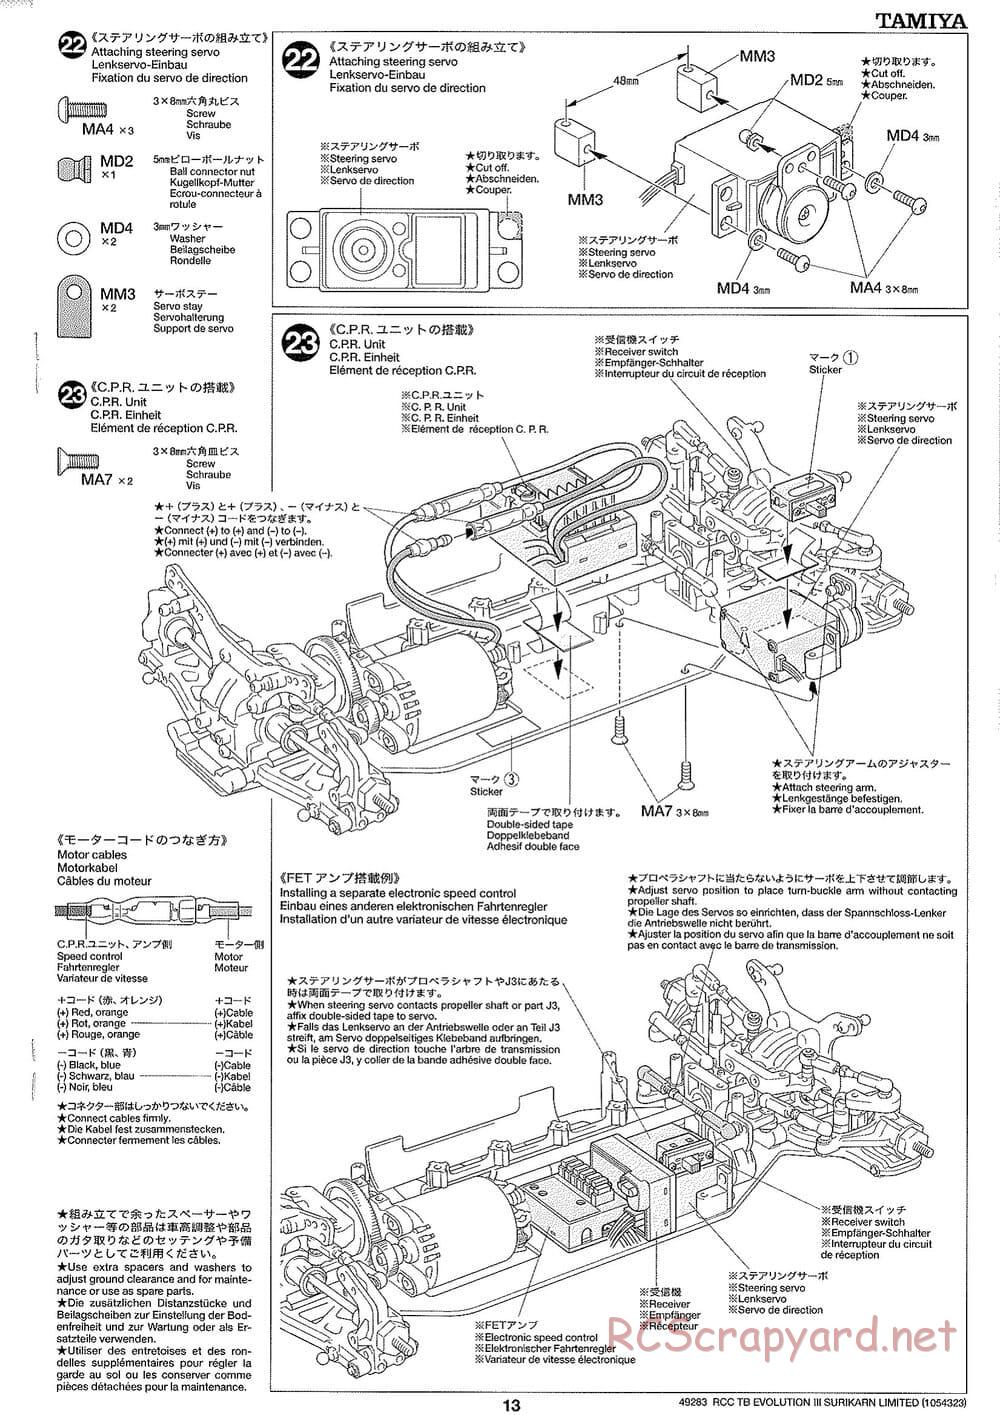 Tamiya - TB Evolution III Surikarn Limited Chassis - Manual - Page 13